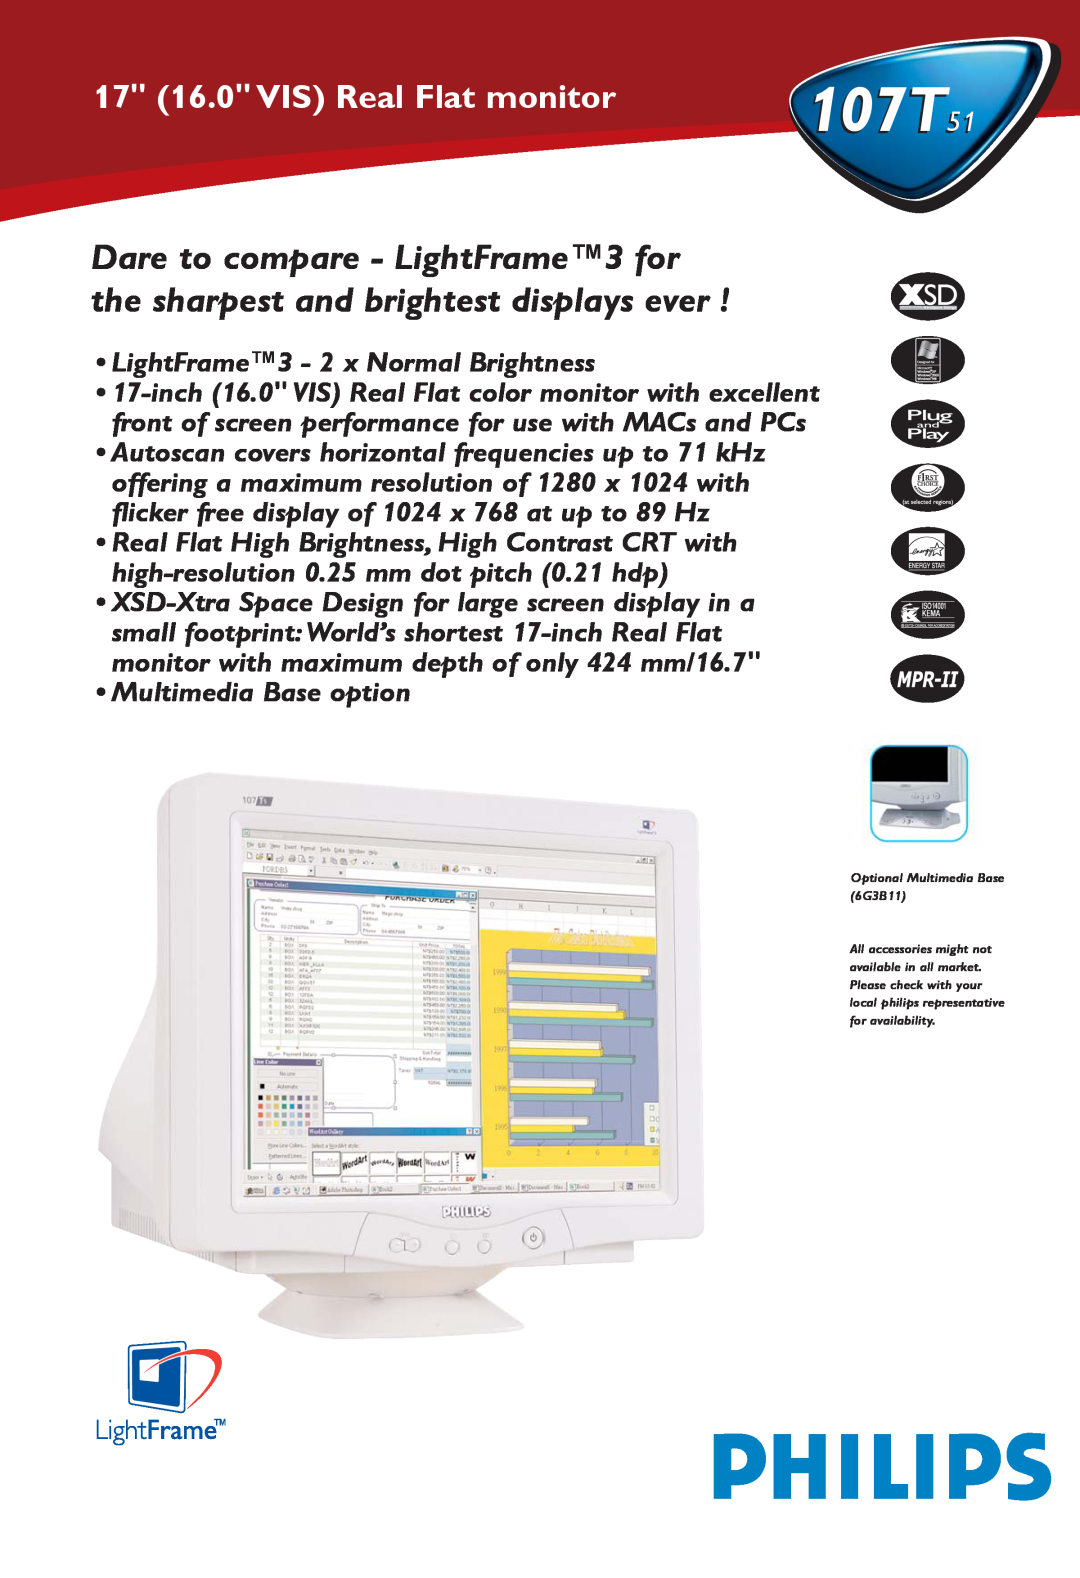 Philips 107T51 manual 17 16.0 VIS Real Flat monitor, LightFrame3 - 2 x Normal Brightness, Multimedia Base option 